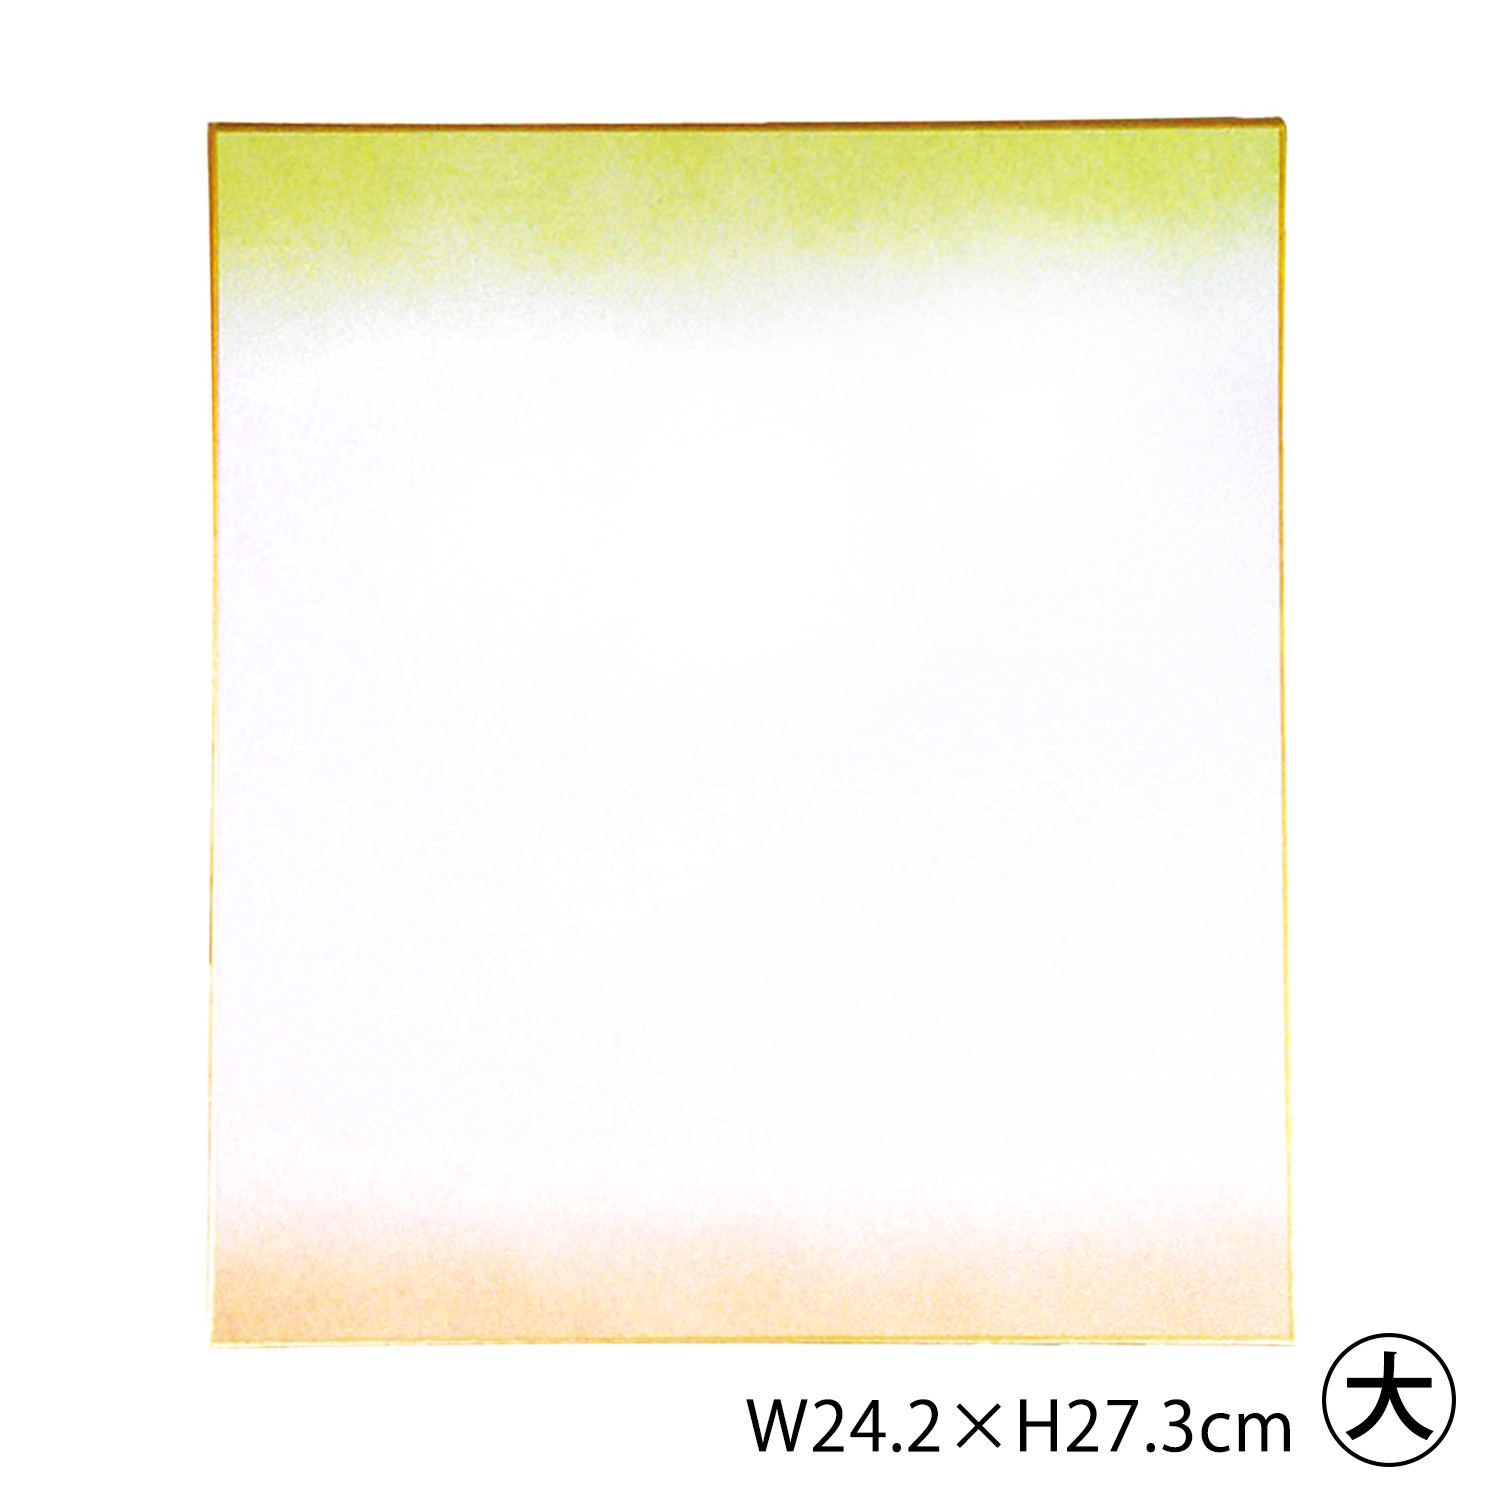 S36-4-G colored paper W24.2×H27.3cm <green> (pcs)